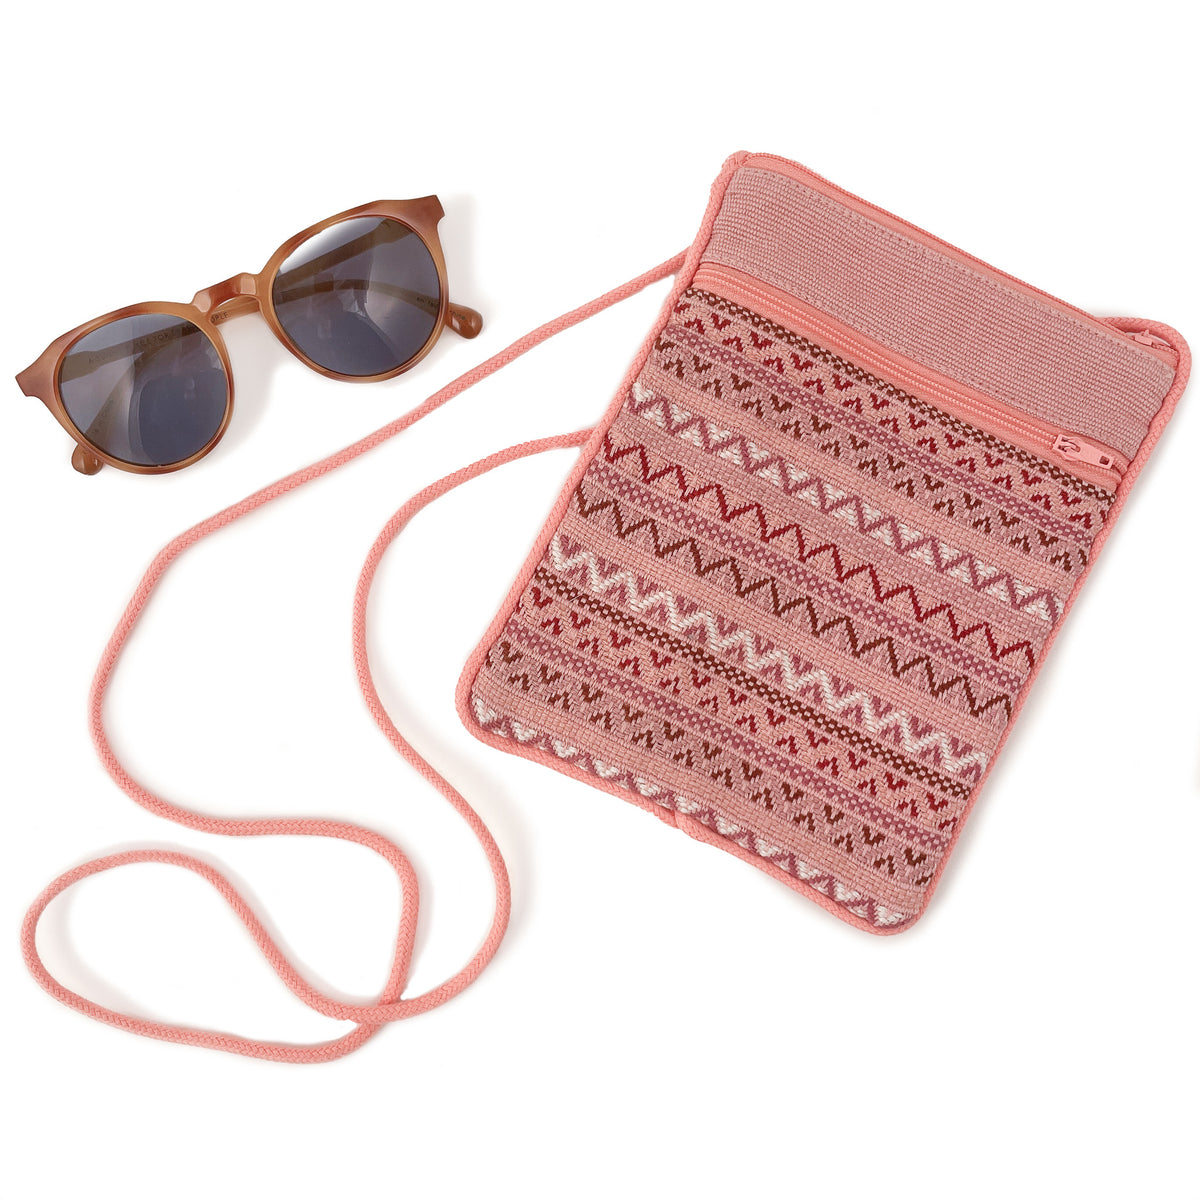 Flat lay photo of blush brocade pocket bag next to a pair of sunglasses